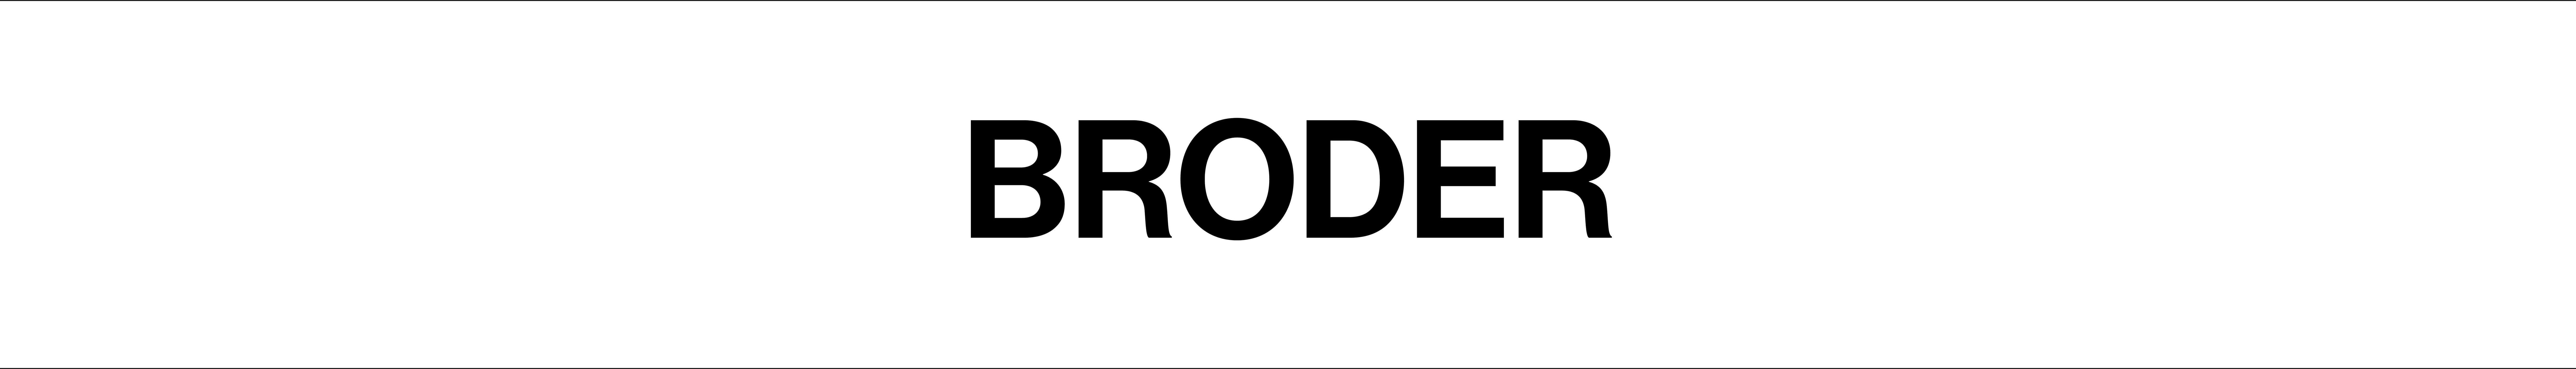 Estudio Broder's profile banner